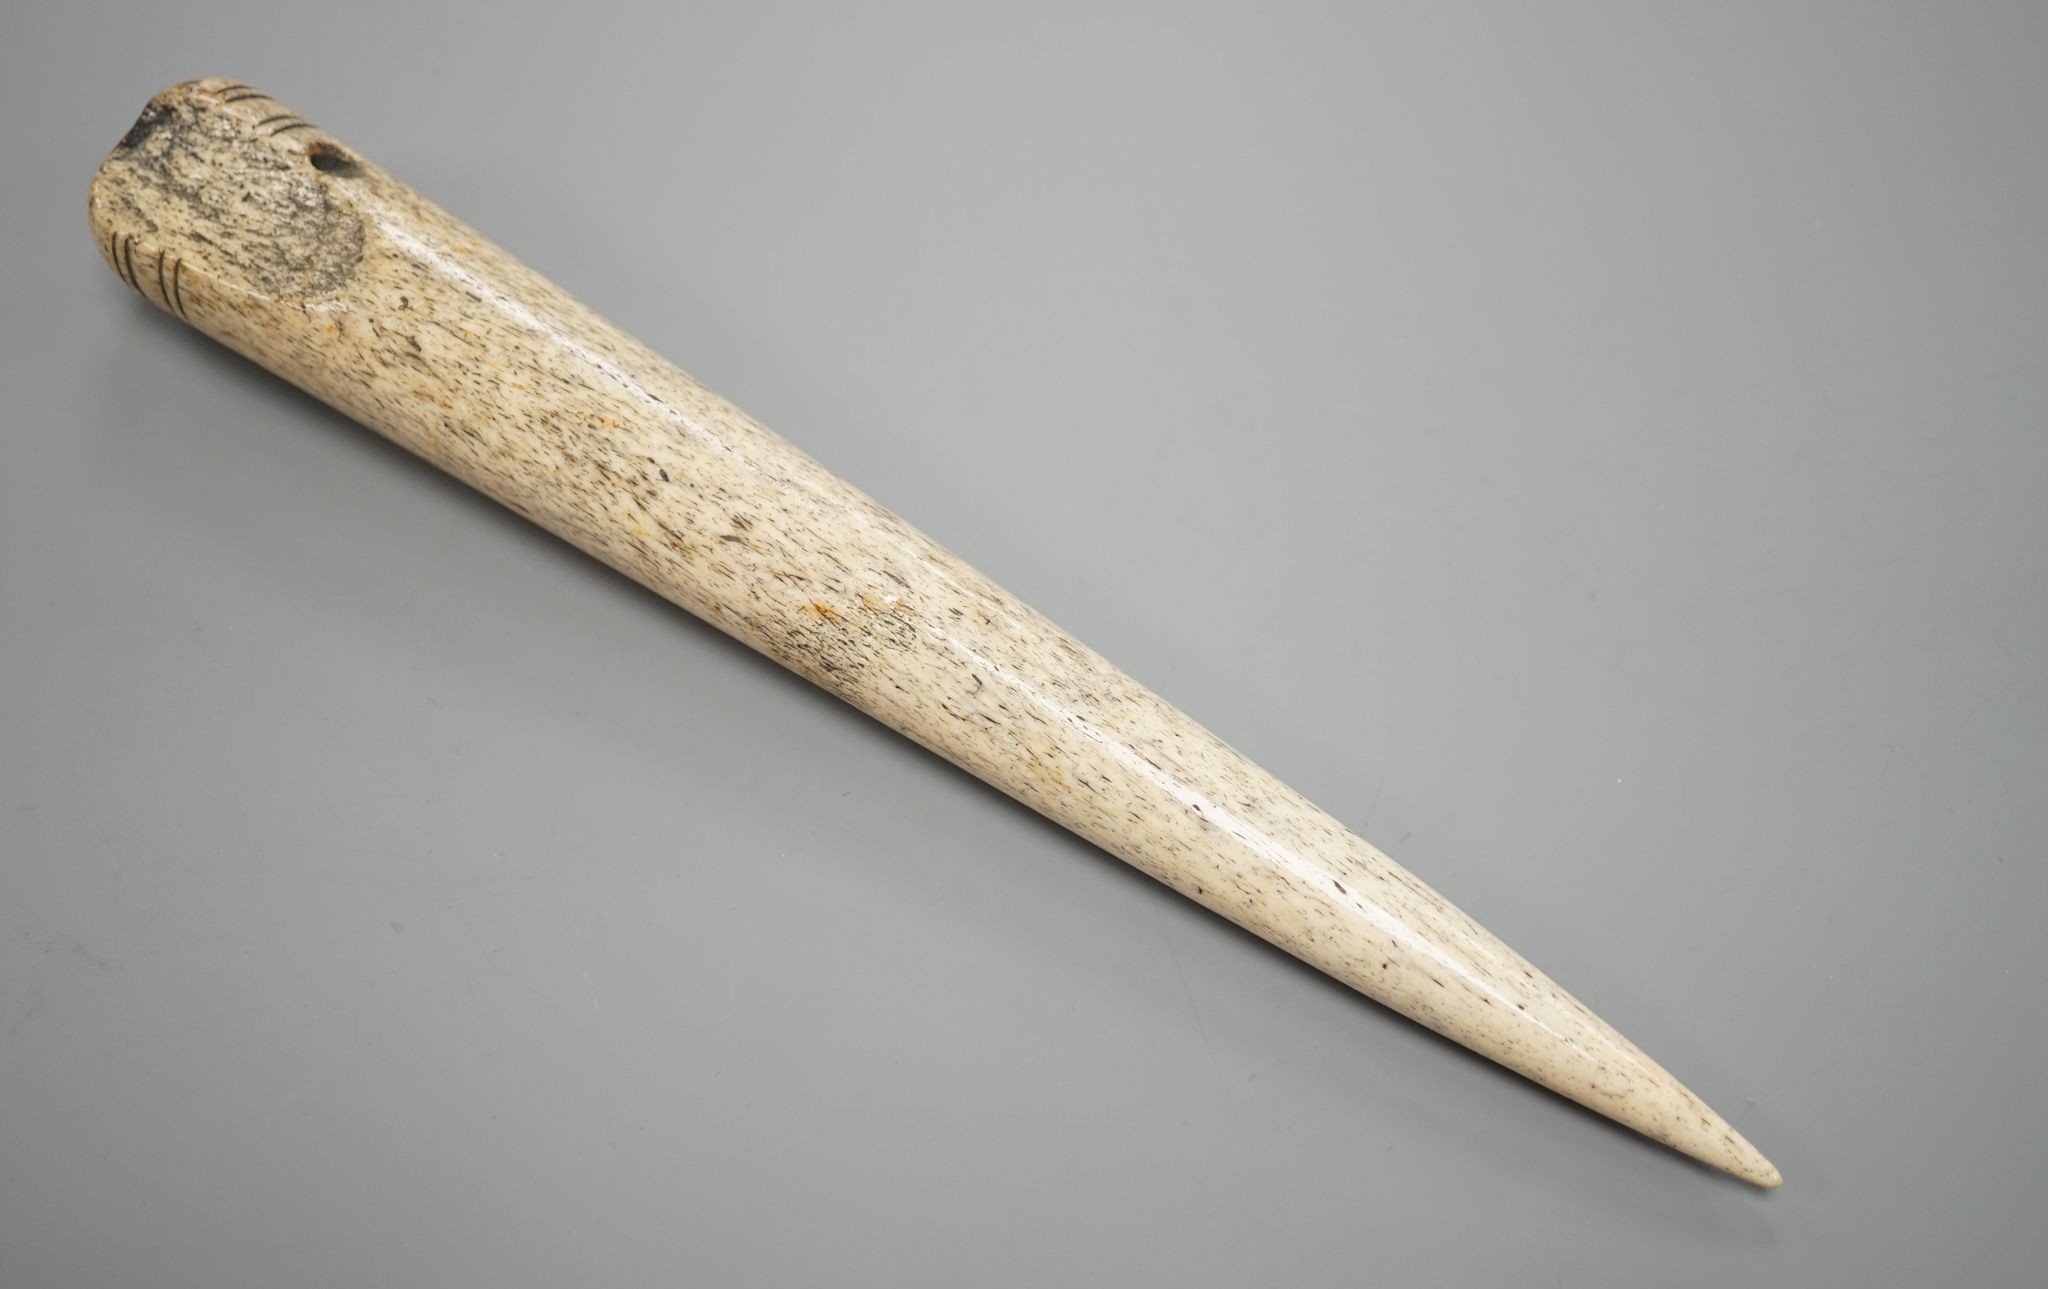 A 19th century Whalebone fid, 31 cms long.